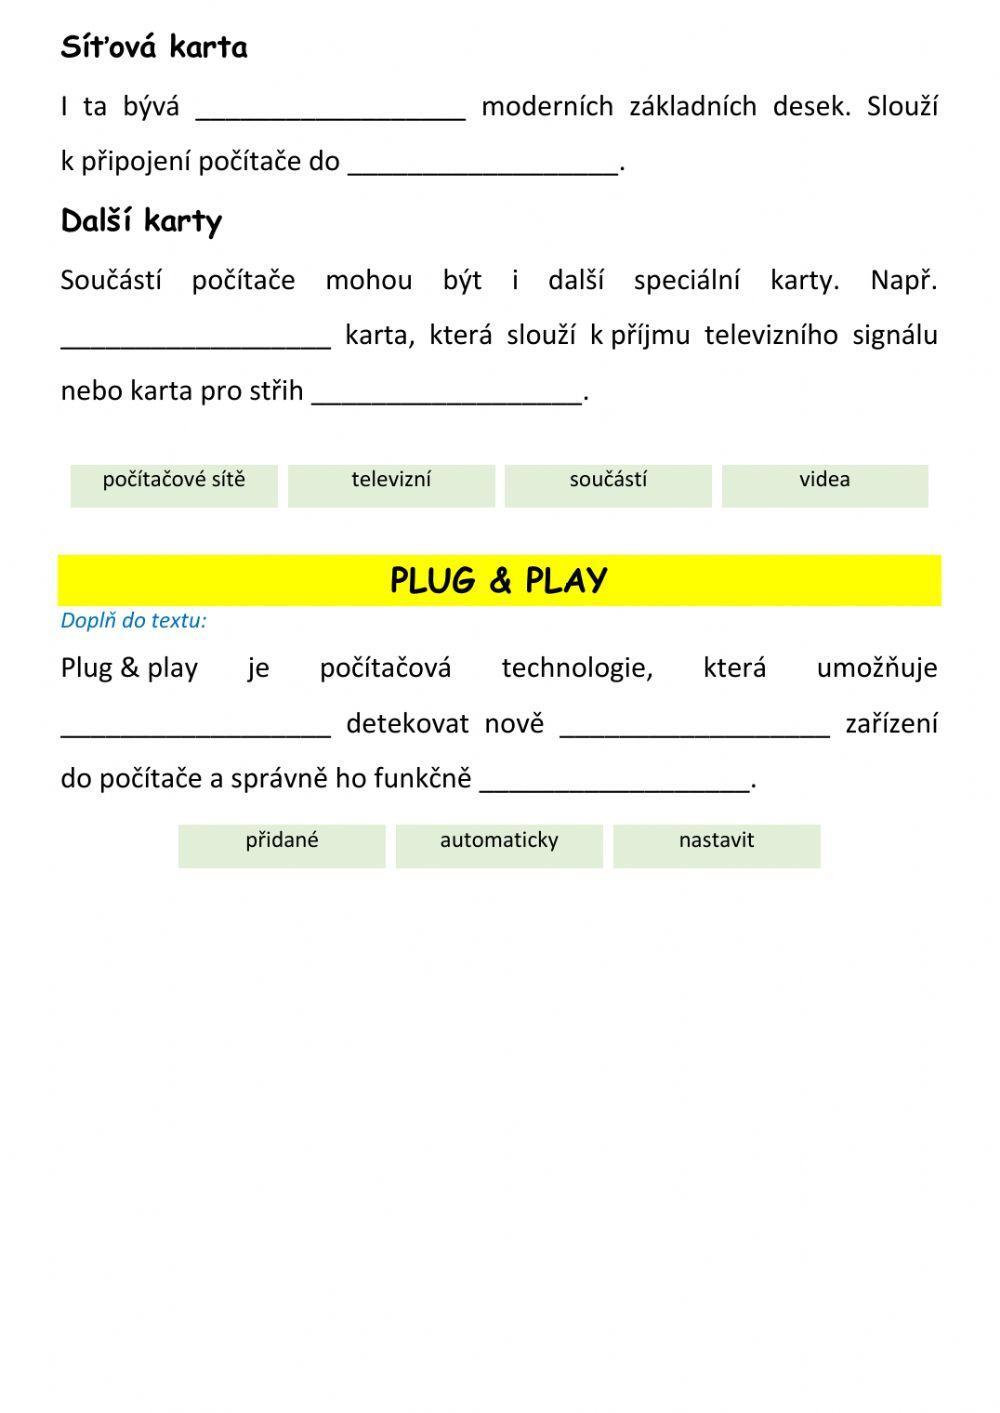 ICT - HW - Karty + Plug and play